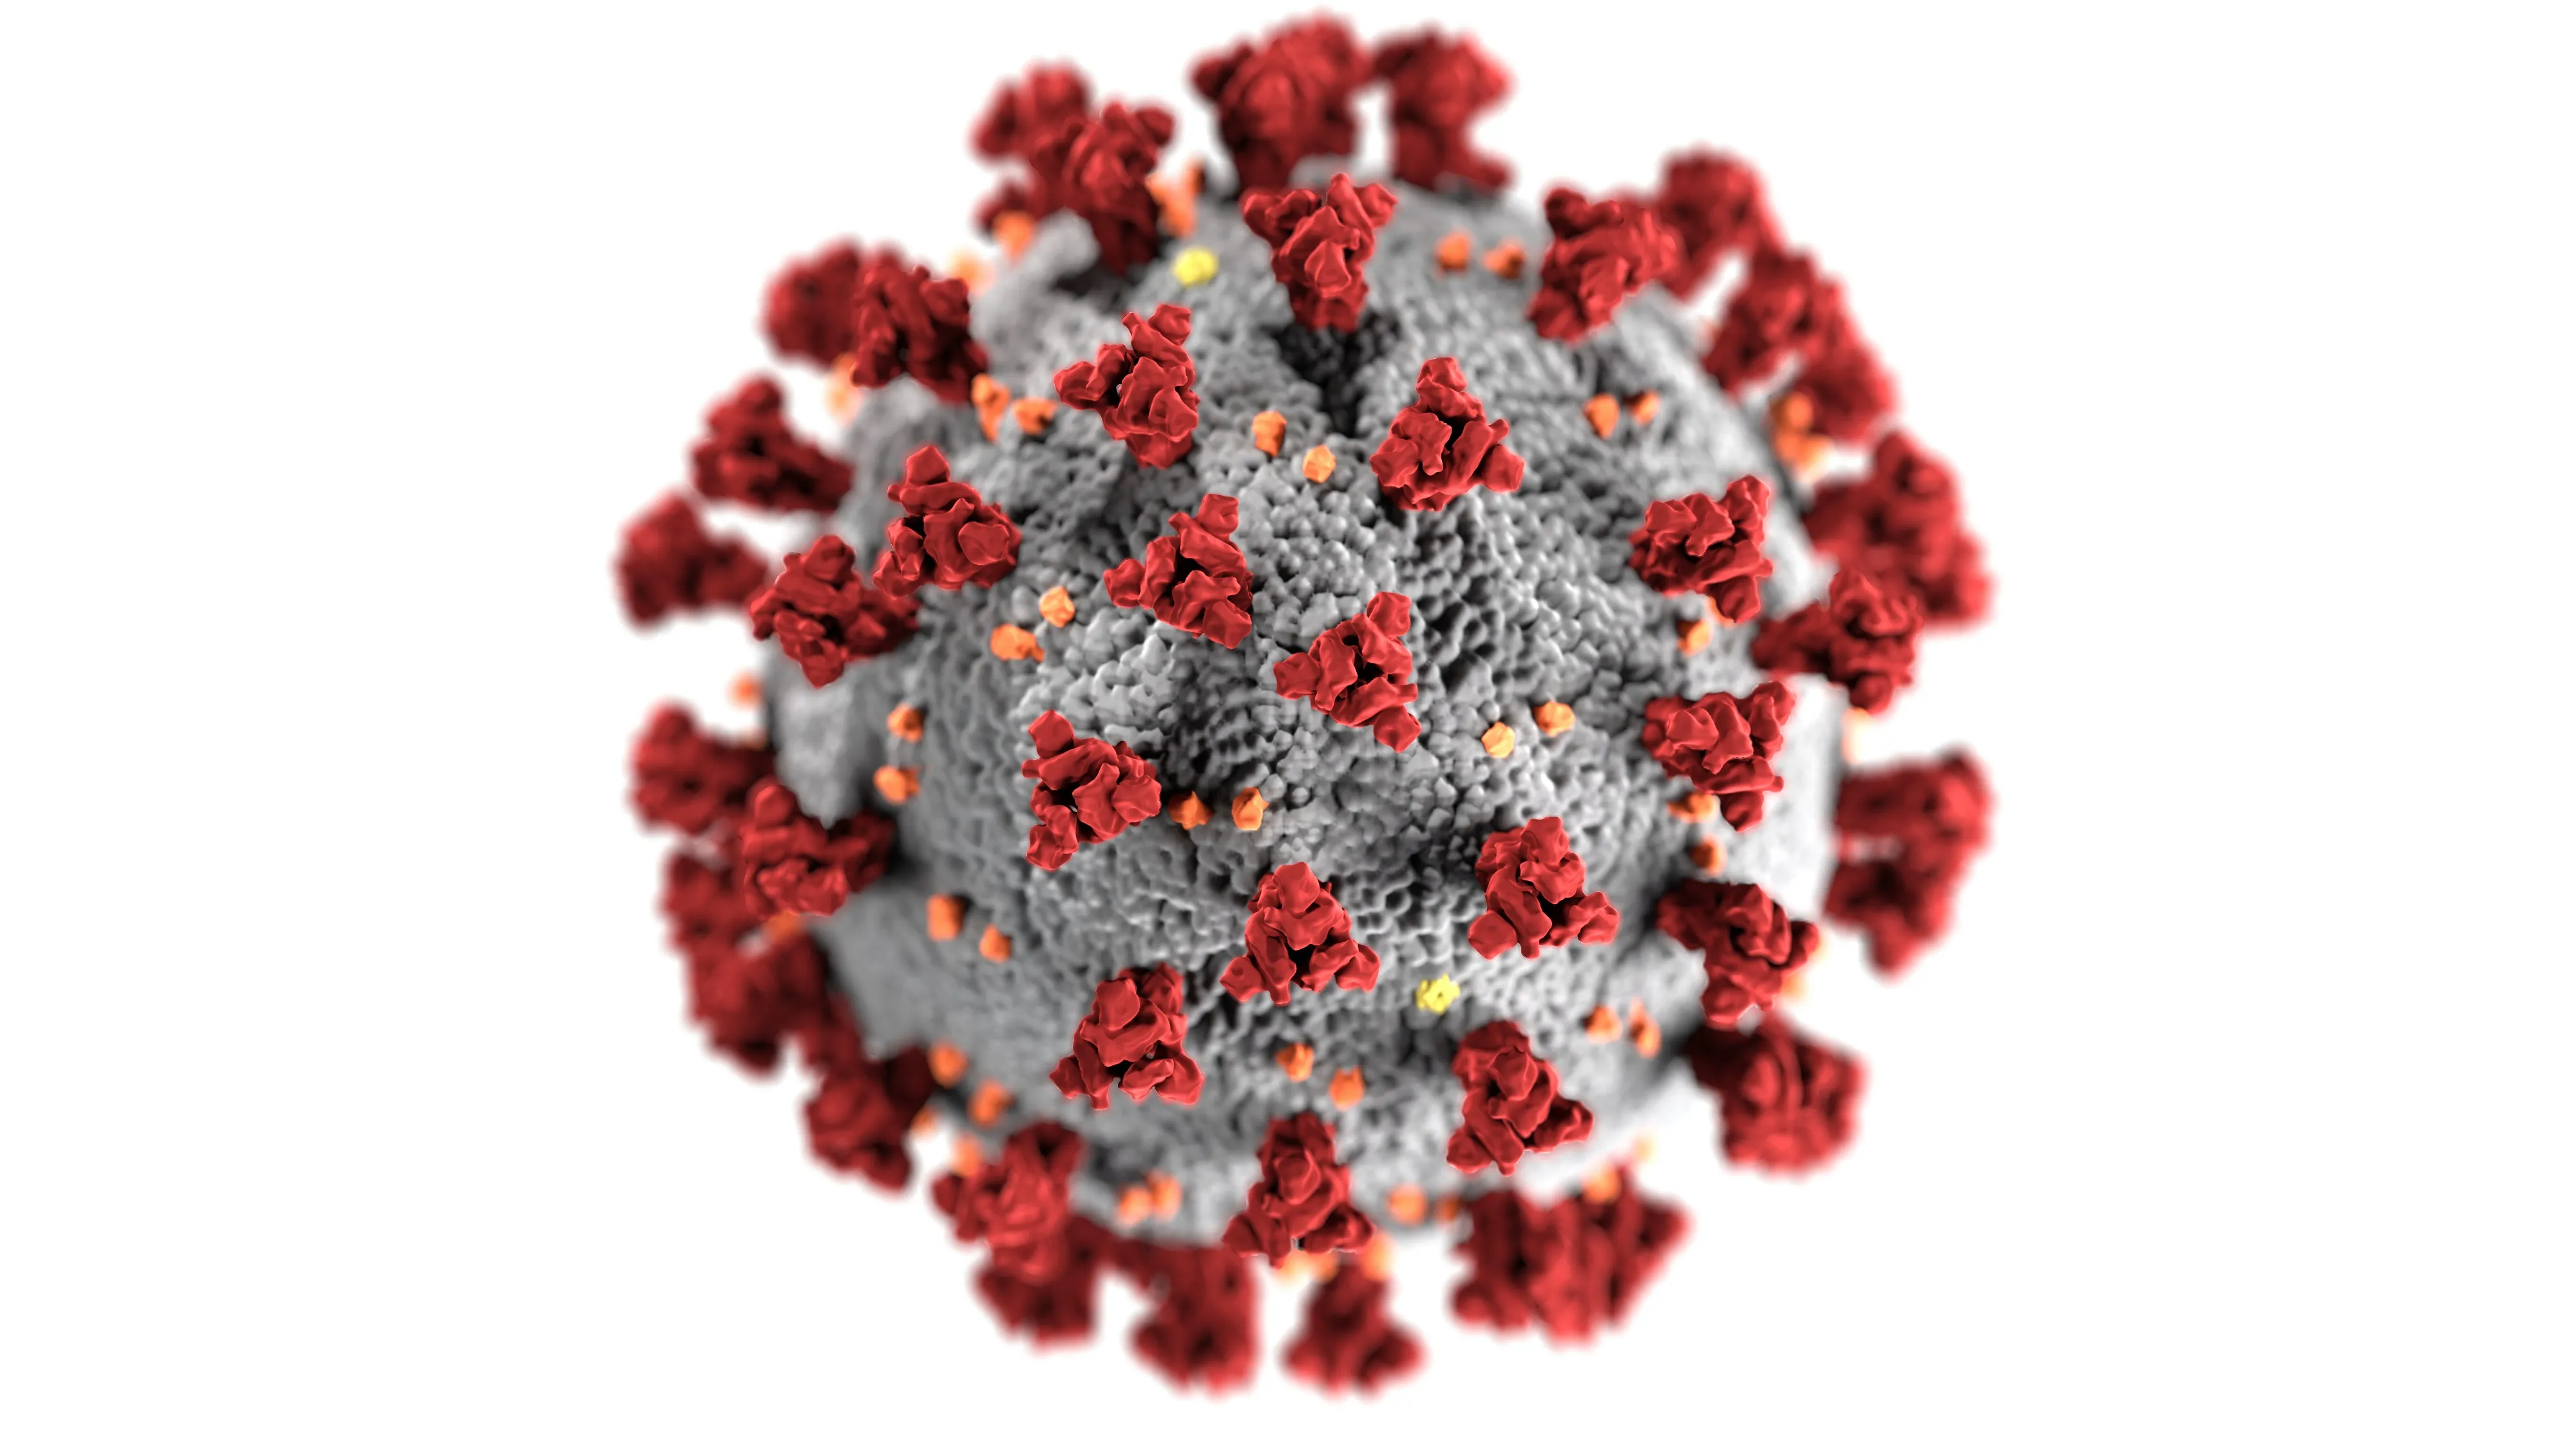 Rendering of the SARS-CoV-2 virus (via the CDC)